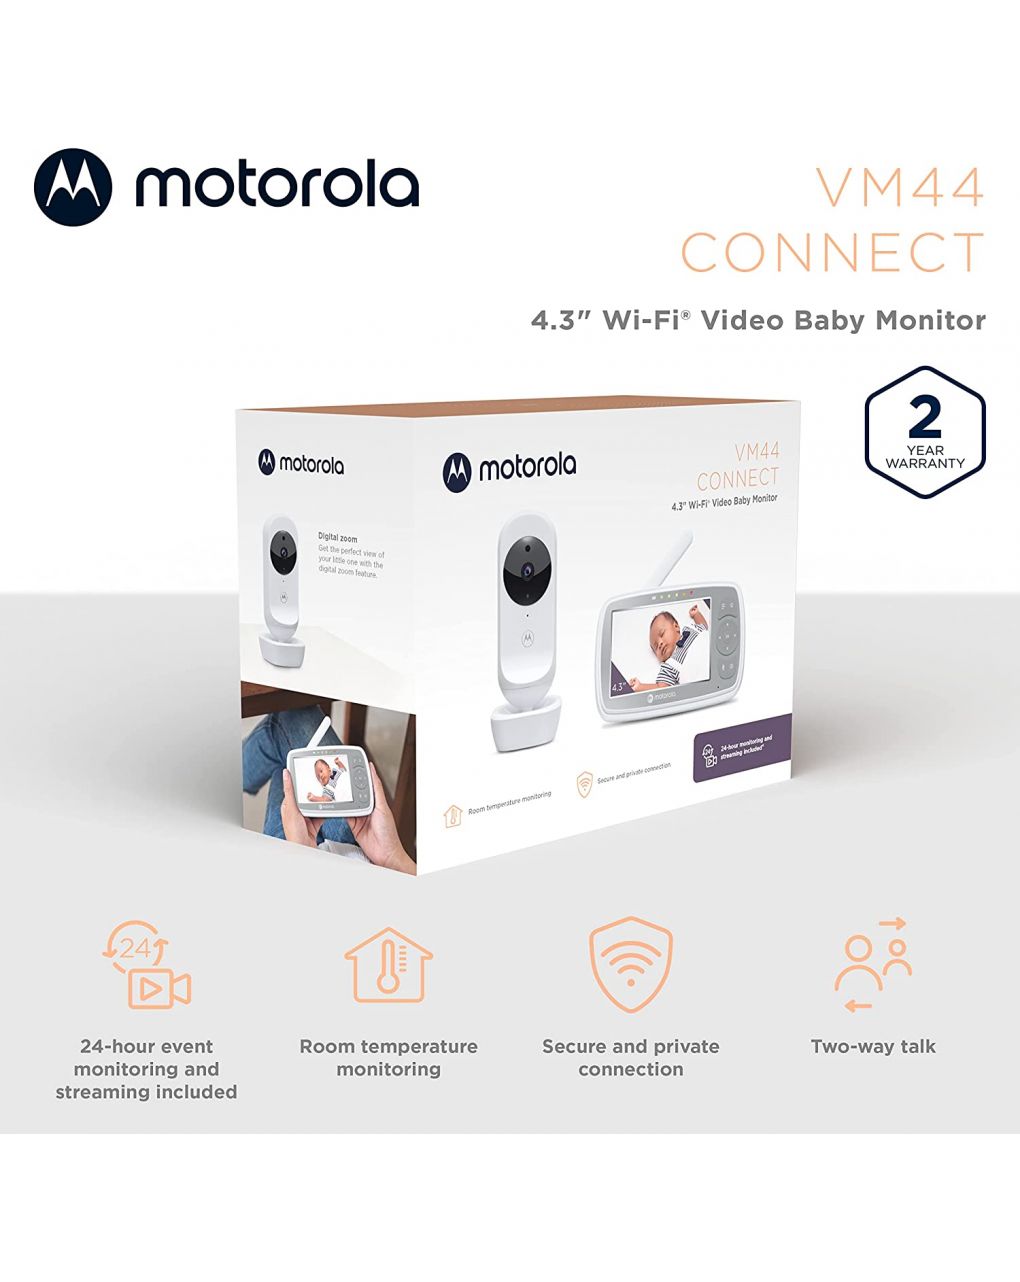 Motorola vm44 connect - Motorola